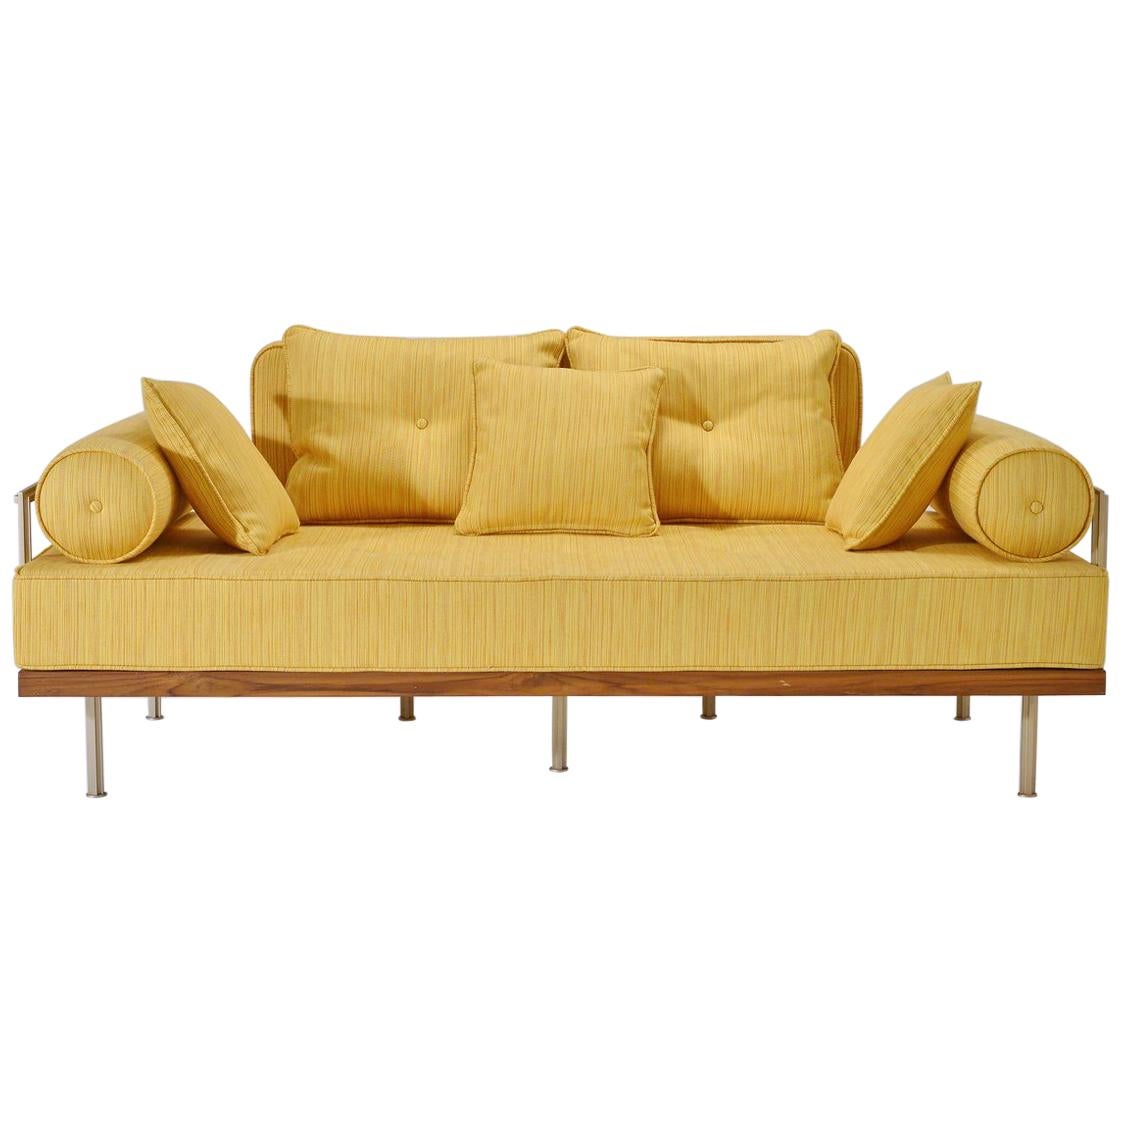 Bespoke Two-Seat Sofa, Brass & Reclaimed Hardwood Frame, P. Tendercool For Sale